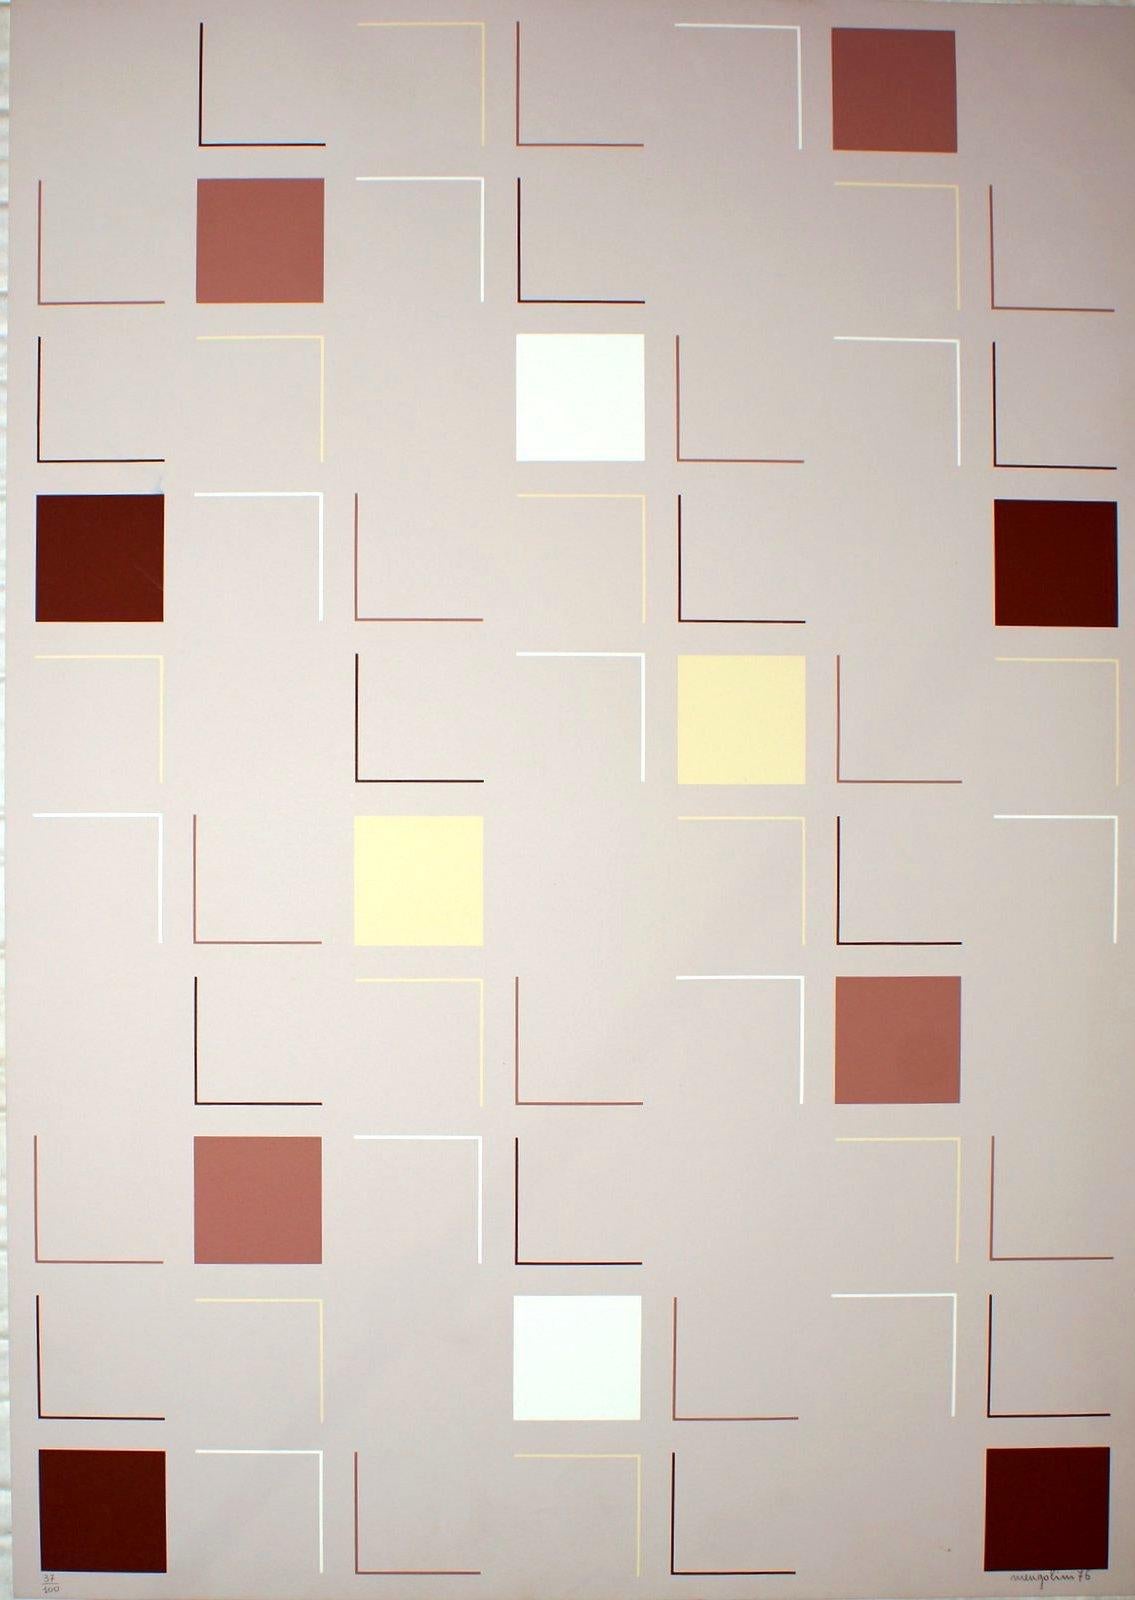 Aldo Mengolini Abstract Print - Square (Grey) - Screen Print by A. Mengolini - 1976